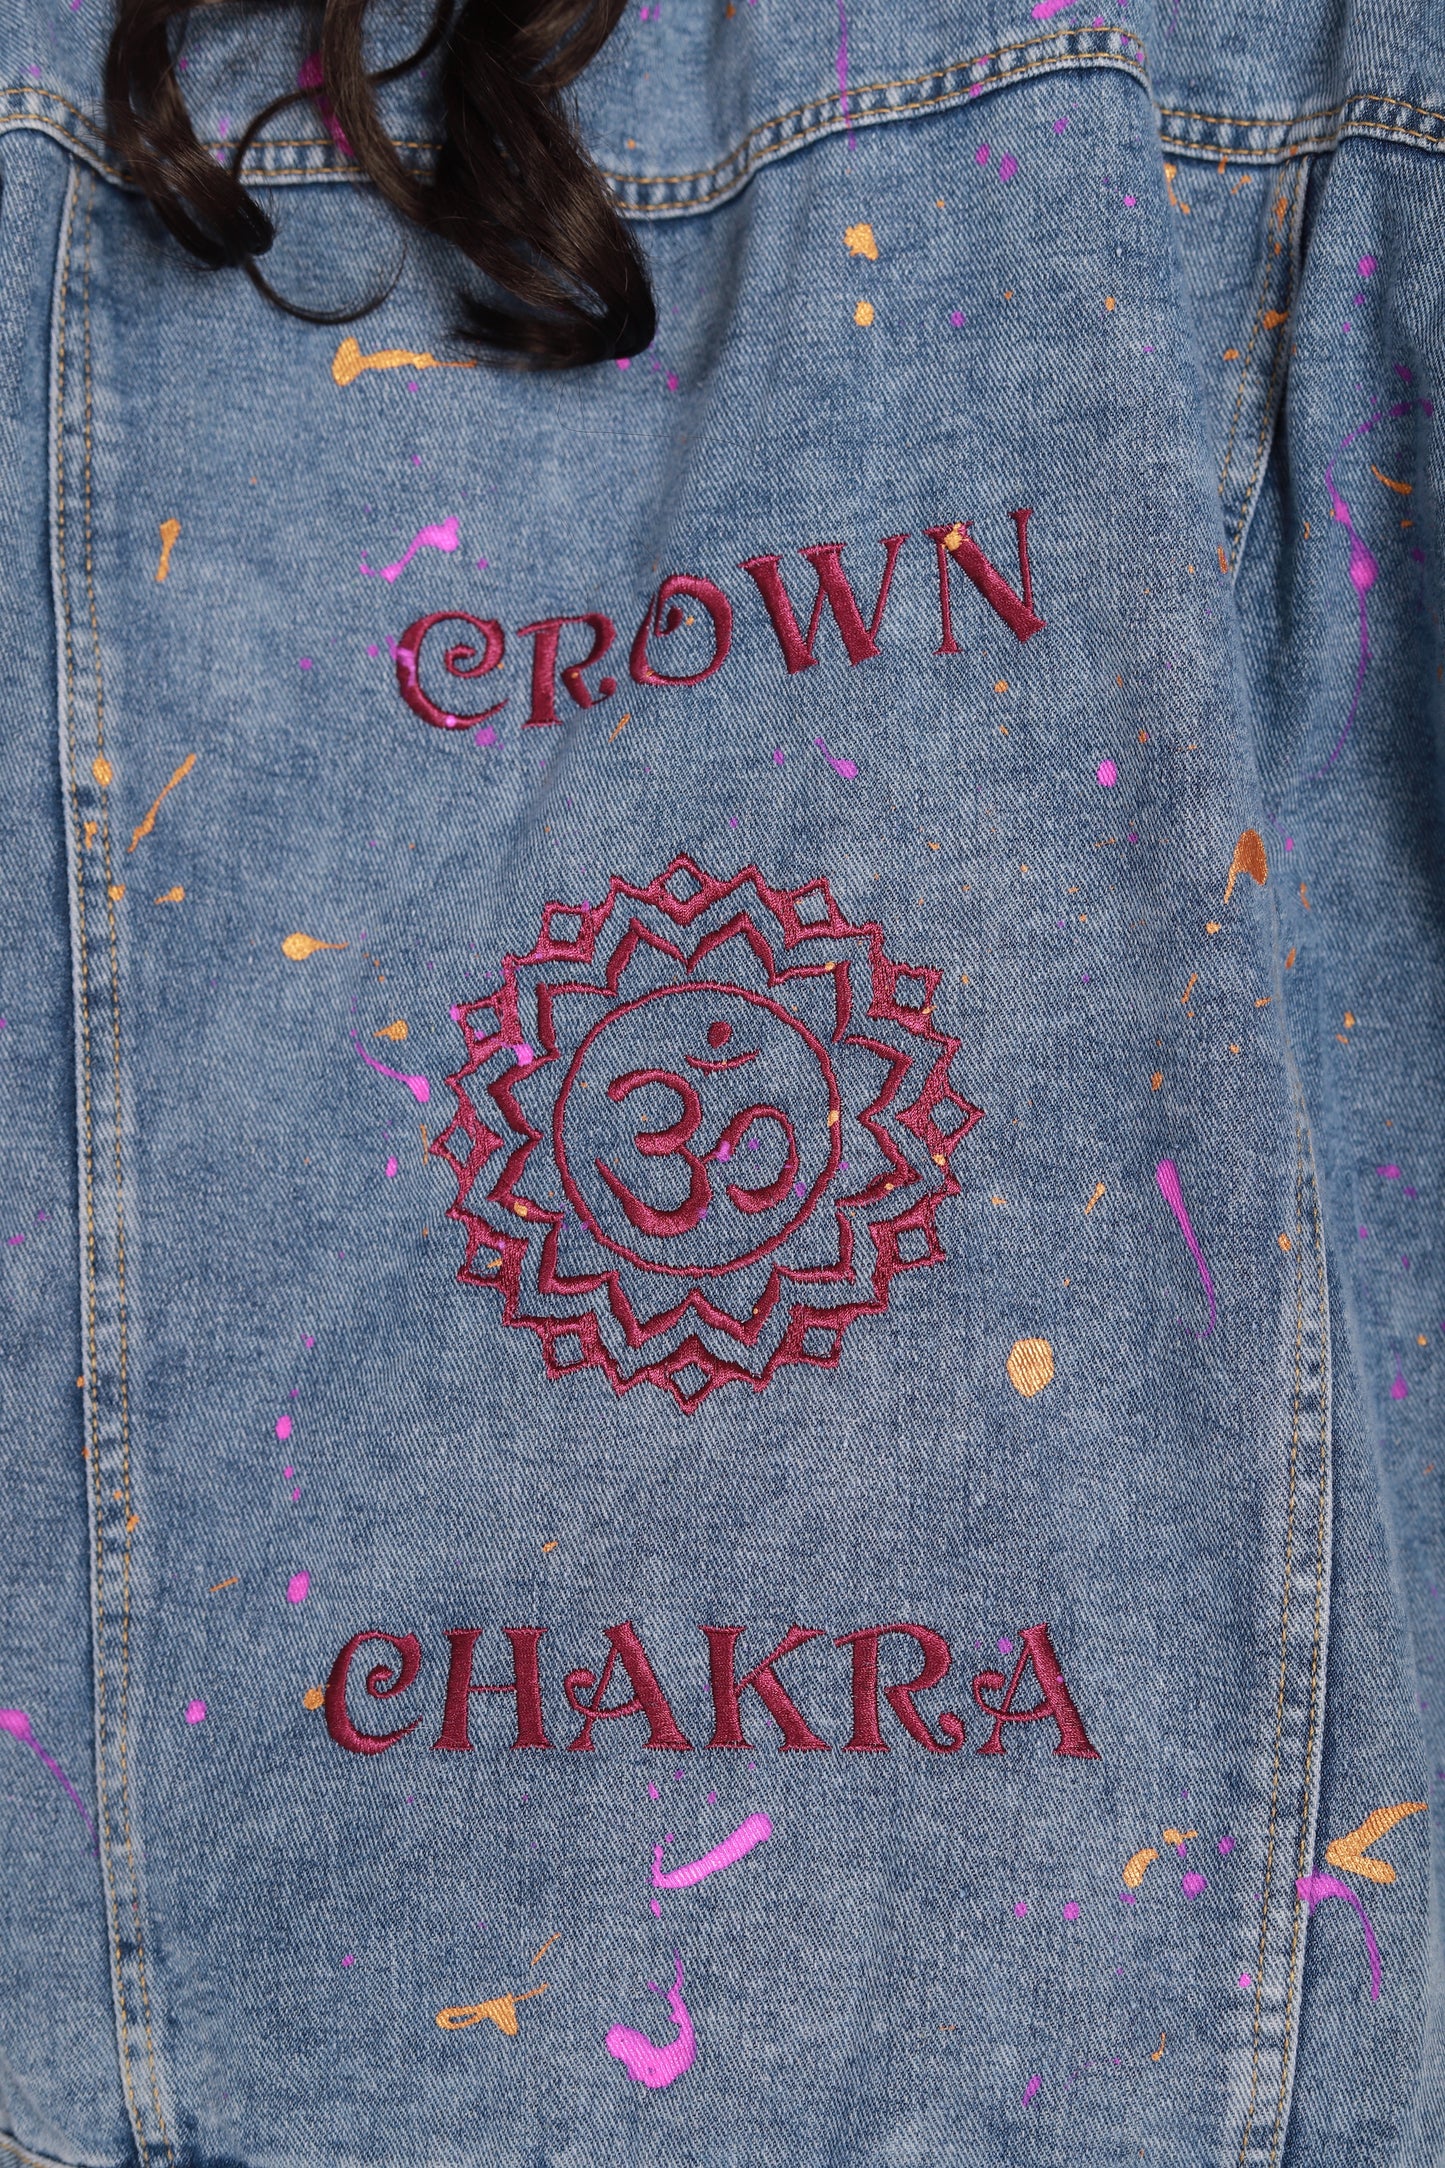 Crown Chakra- Light Weight Oversized Denim Jacket.